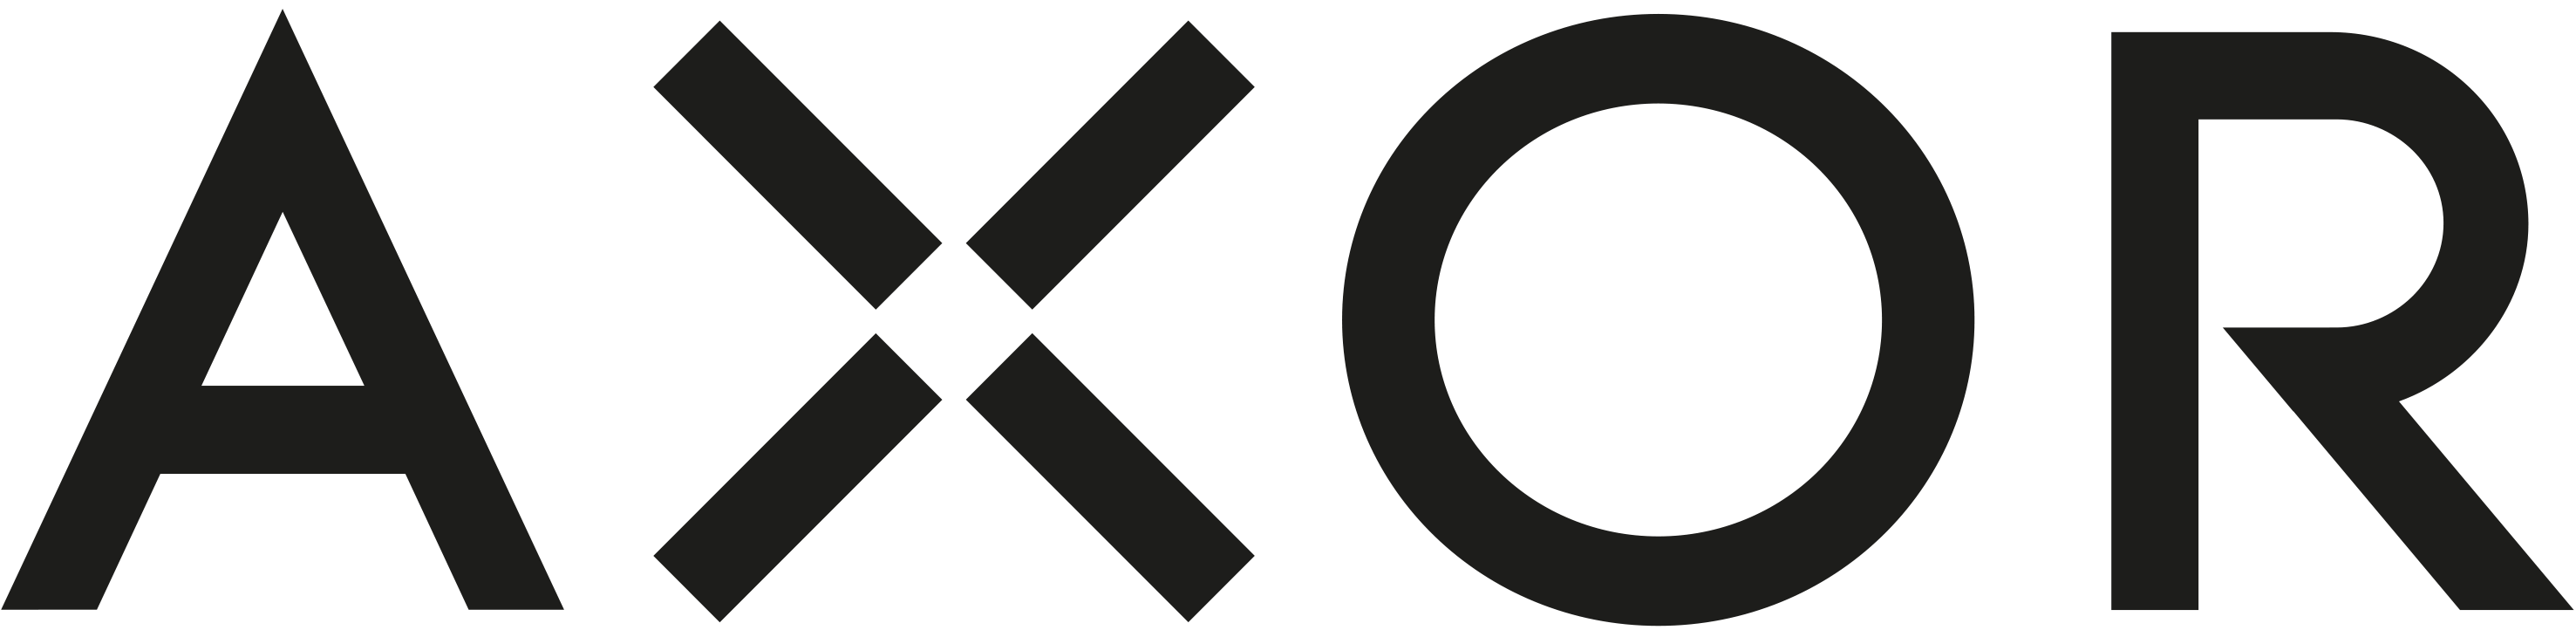 Логотип бренда Axor